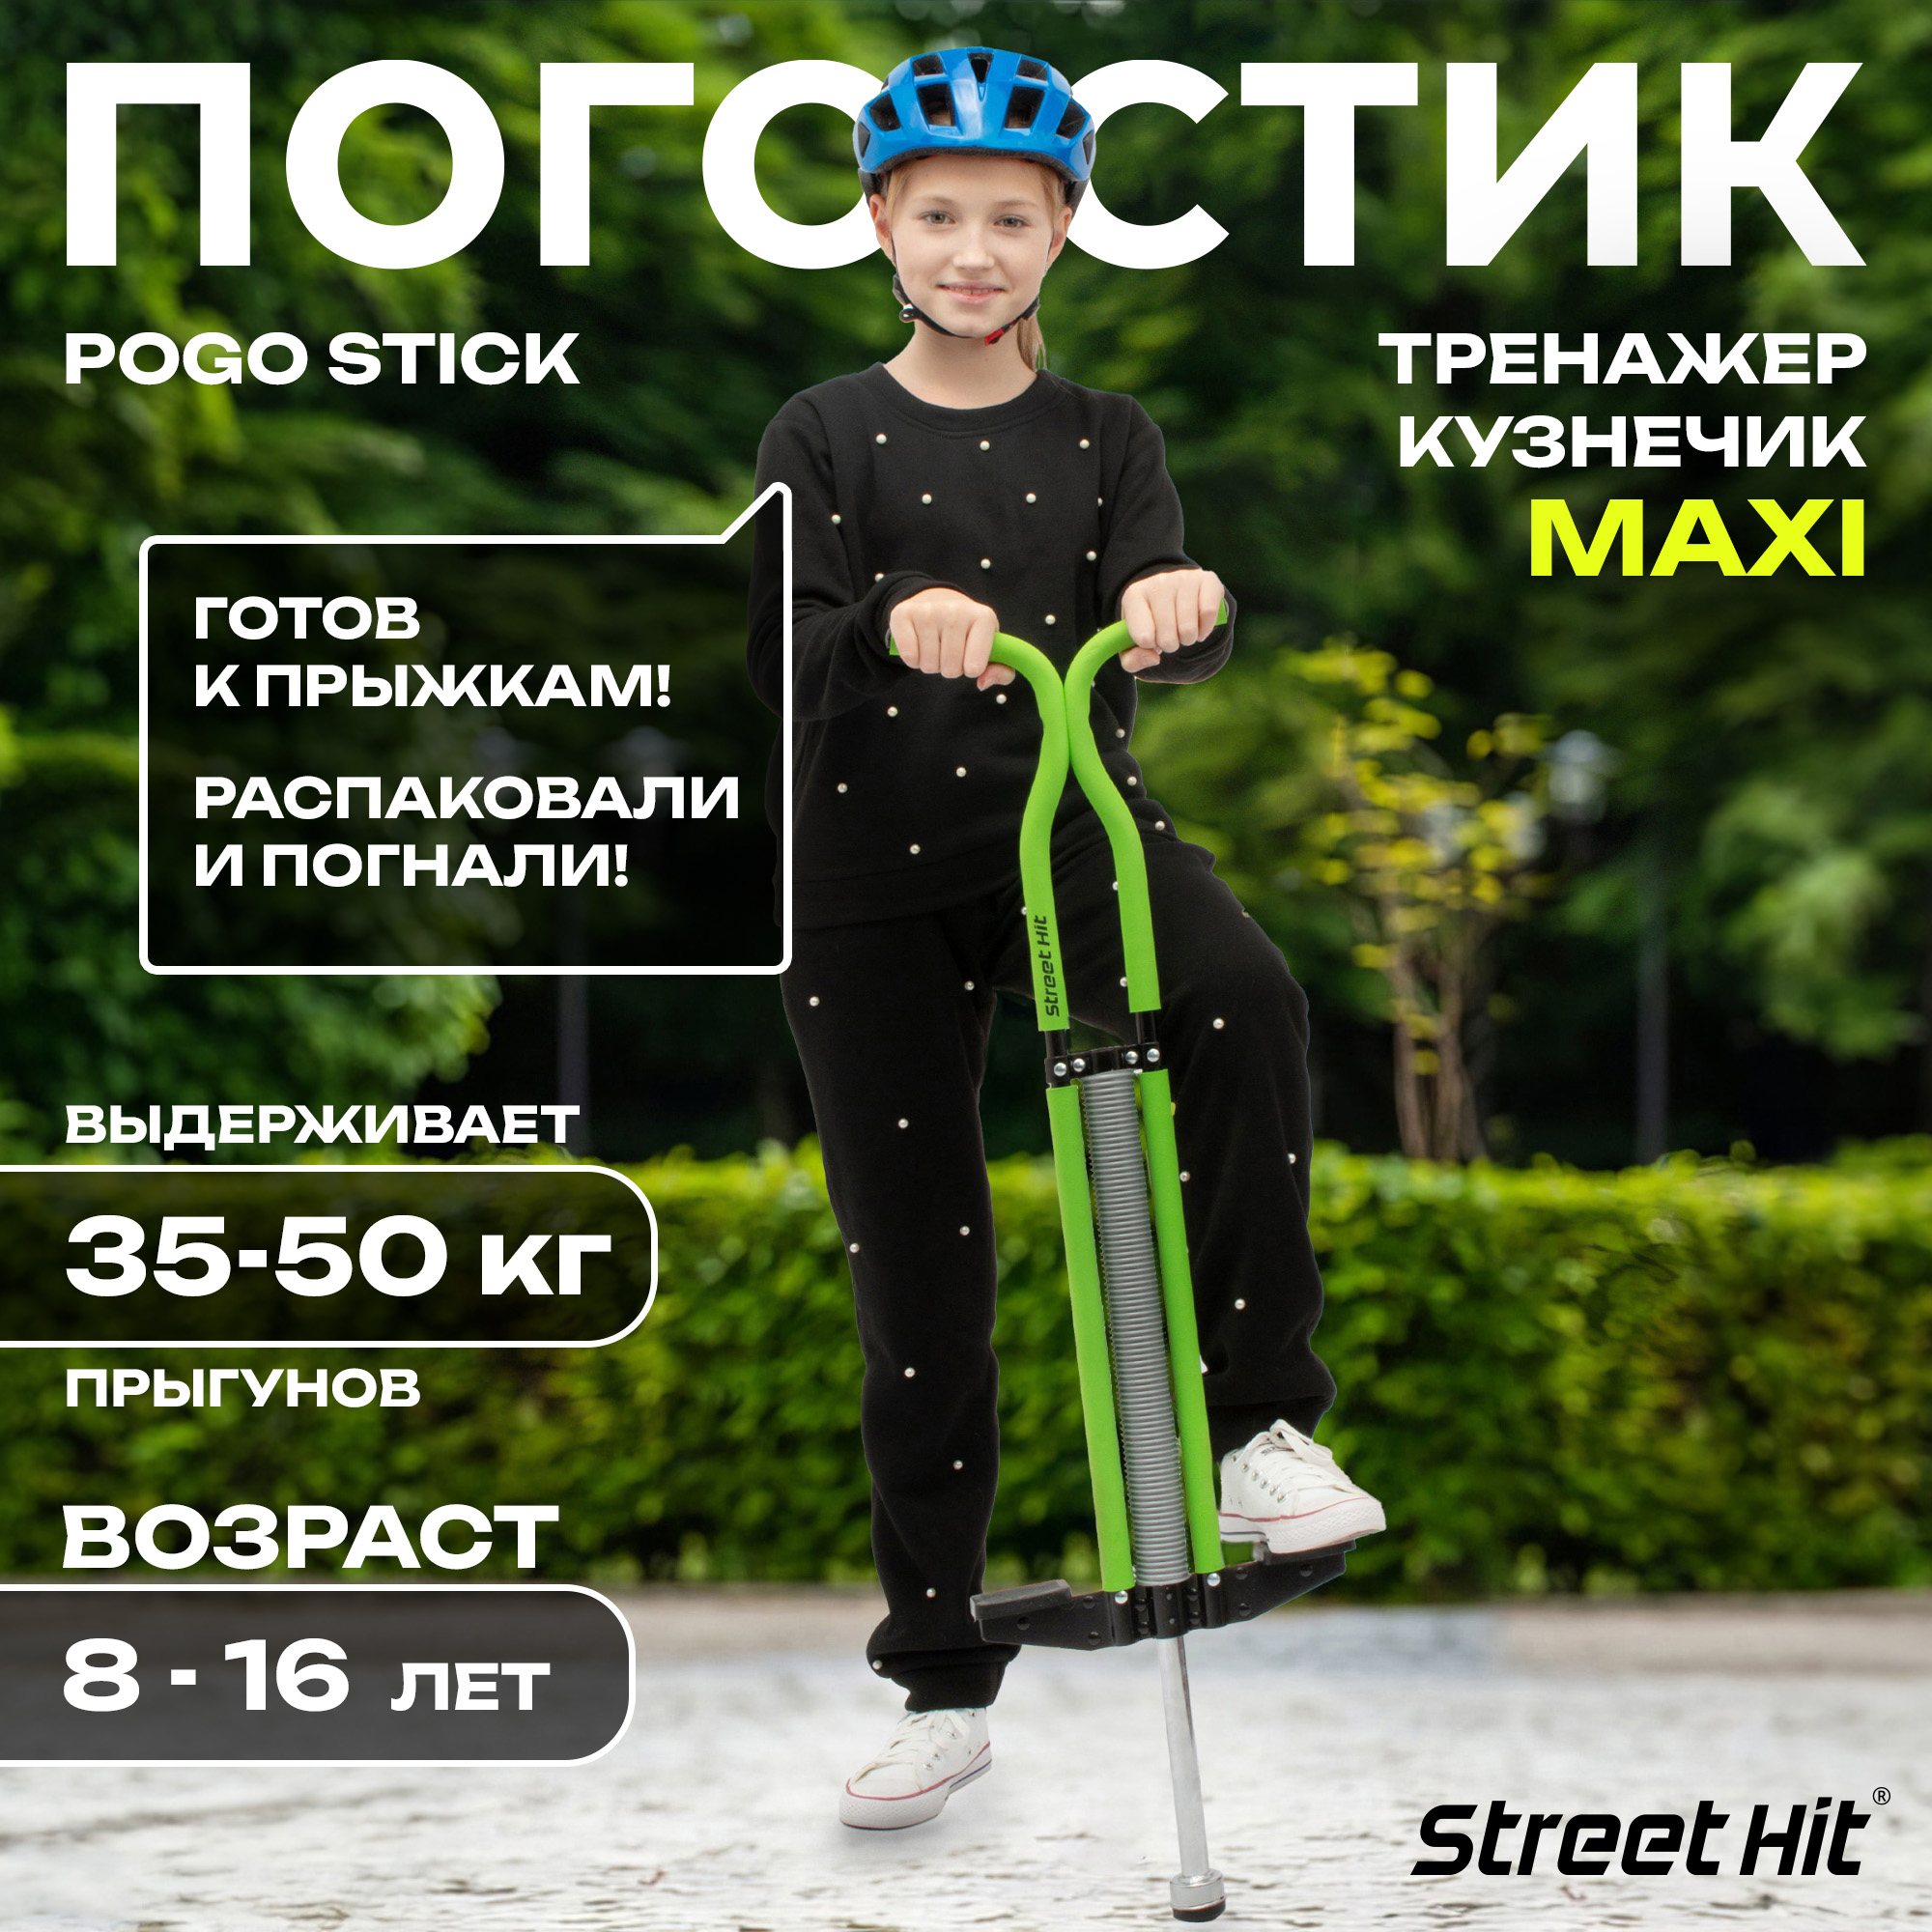 Тренажер-кузнечик Street Hit Pogo Stick Maxi до 50 кг Зеленый - фото 1